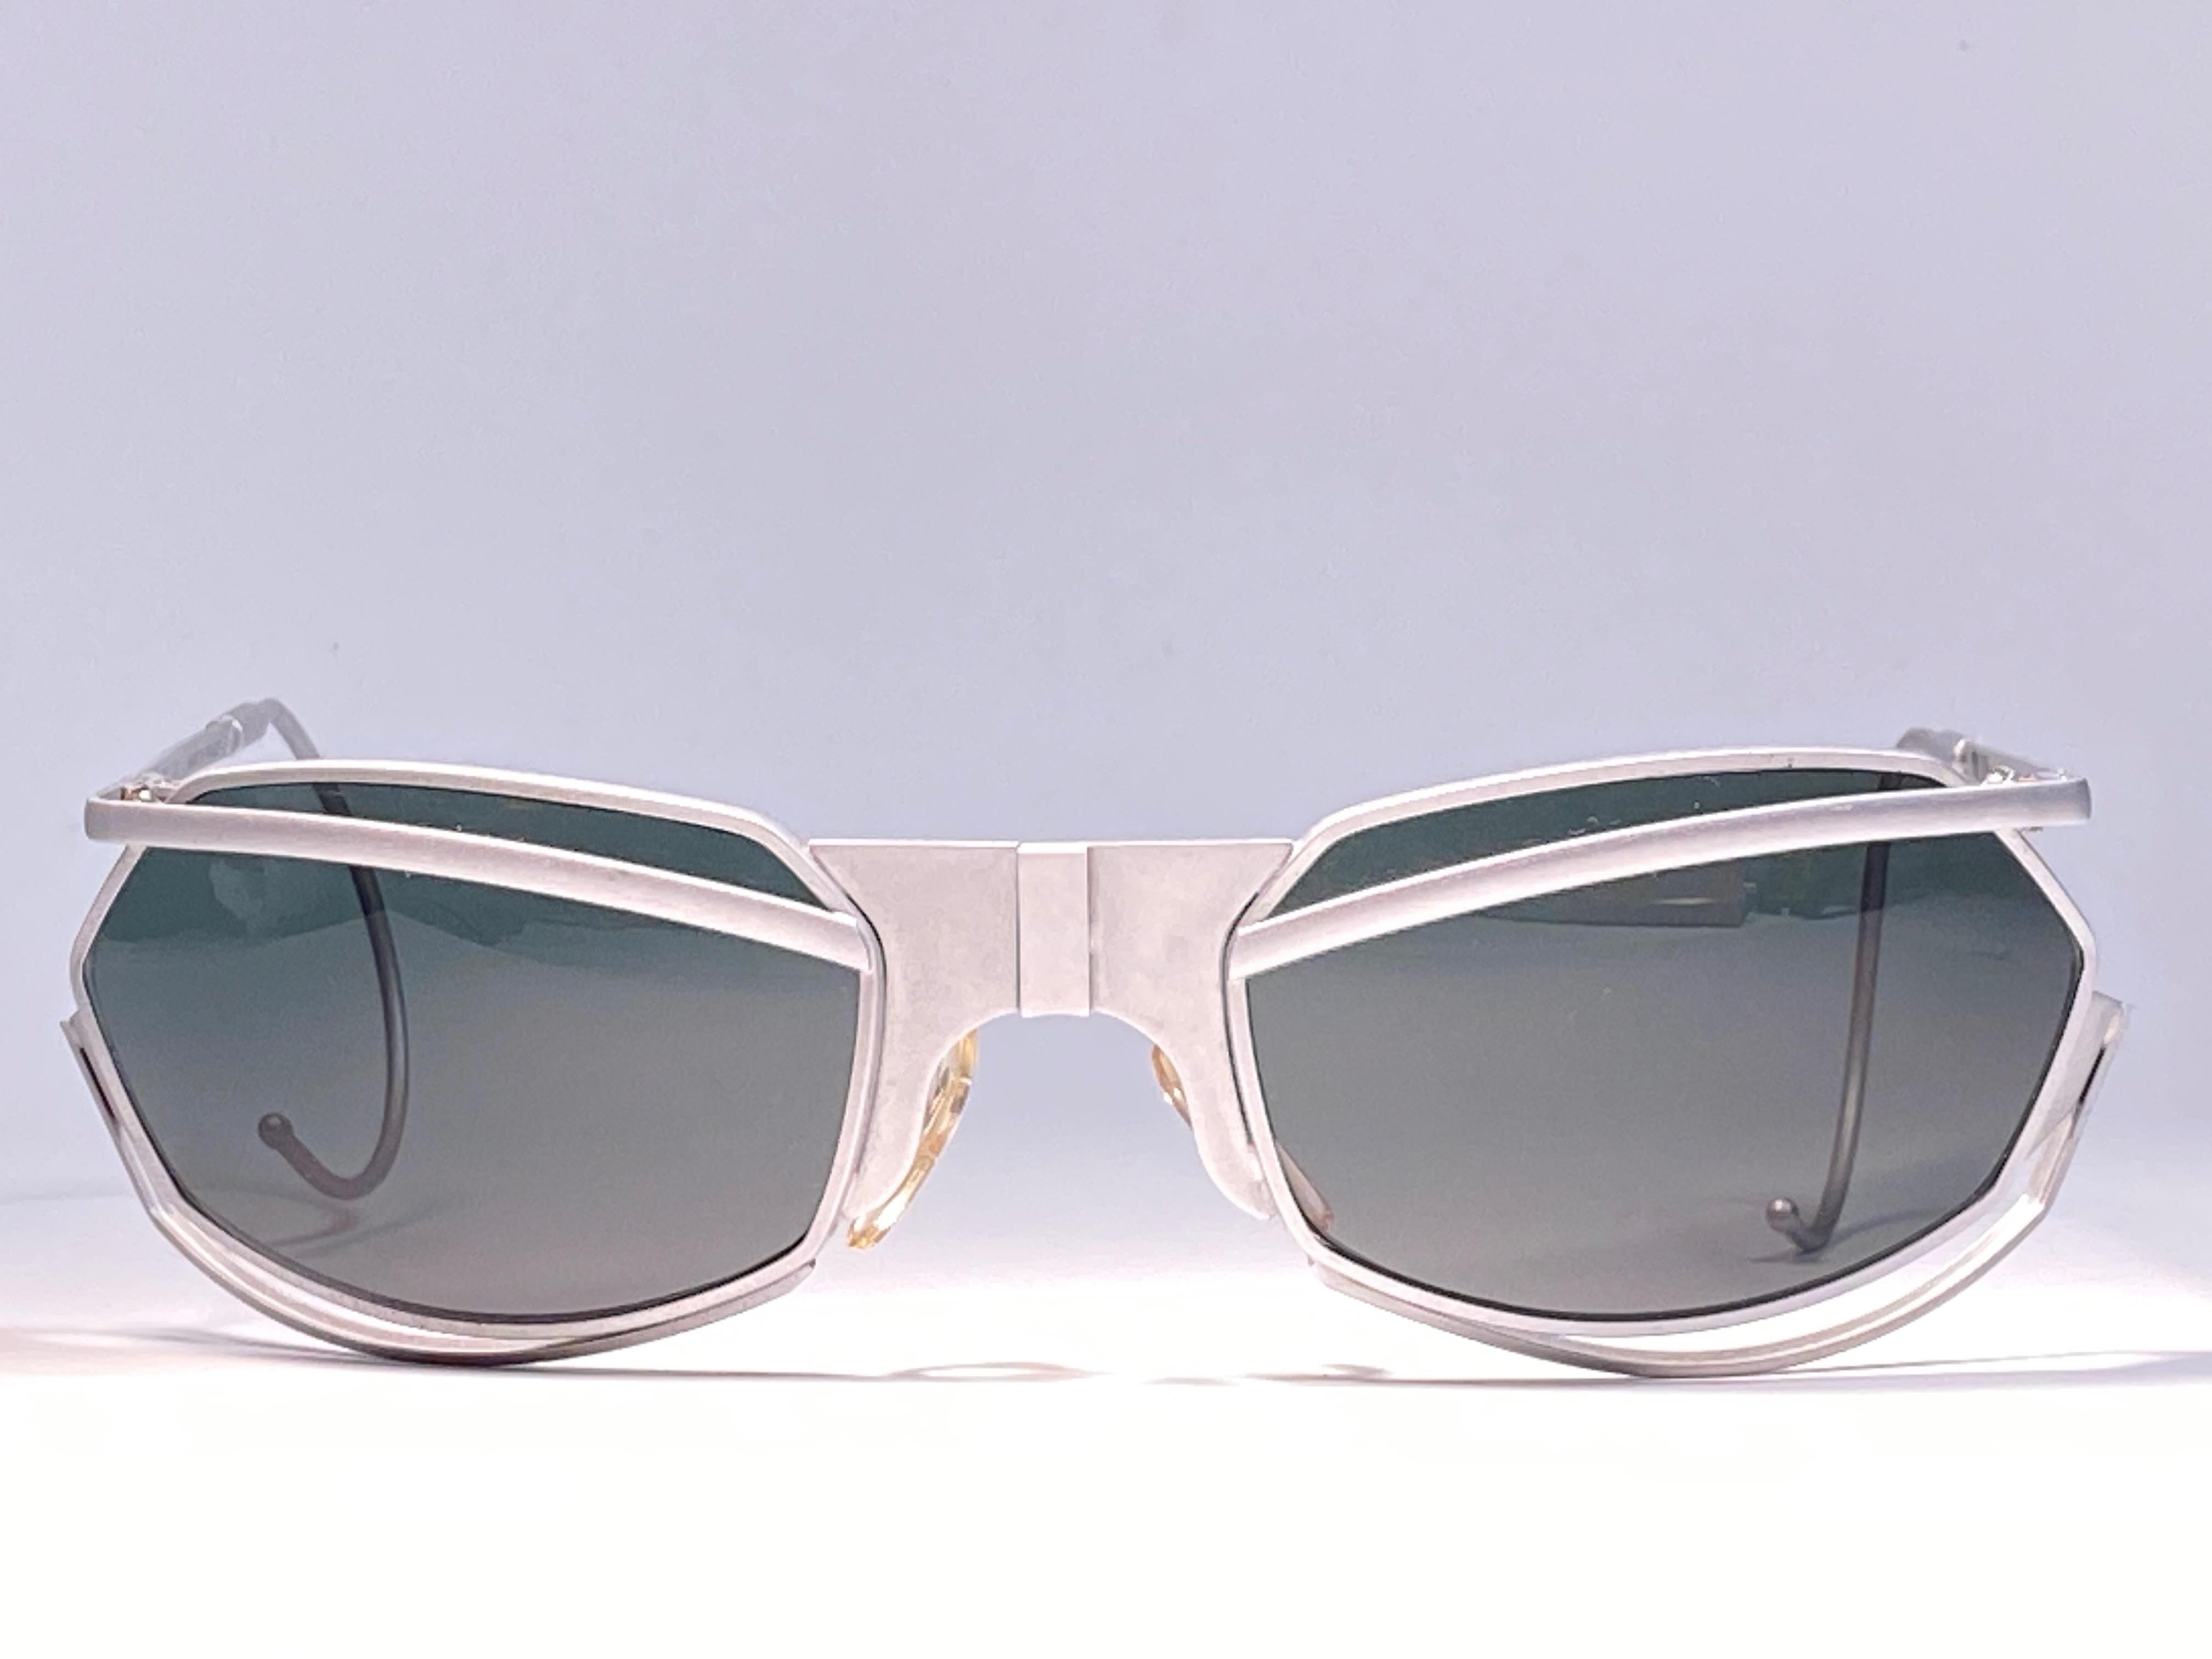 New Vintage IDC Pour Marithe Francois Girbaud Folding Silver Sunglasses France 2